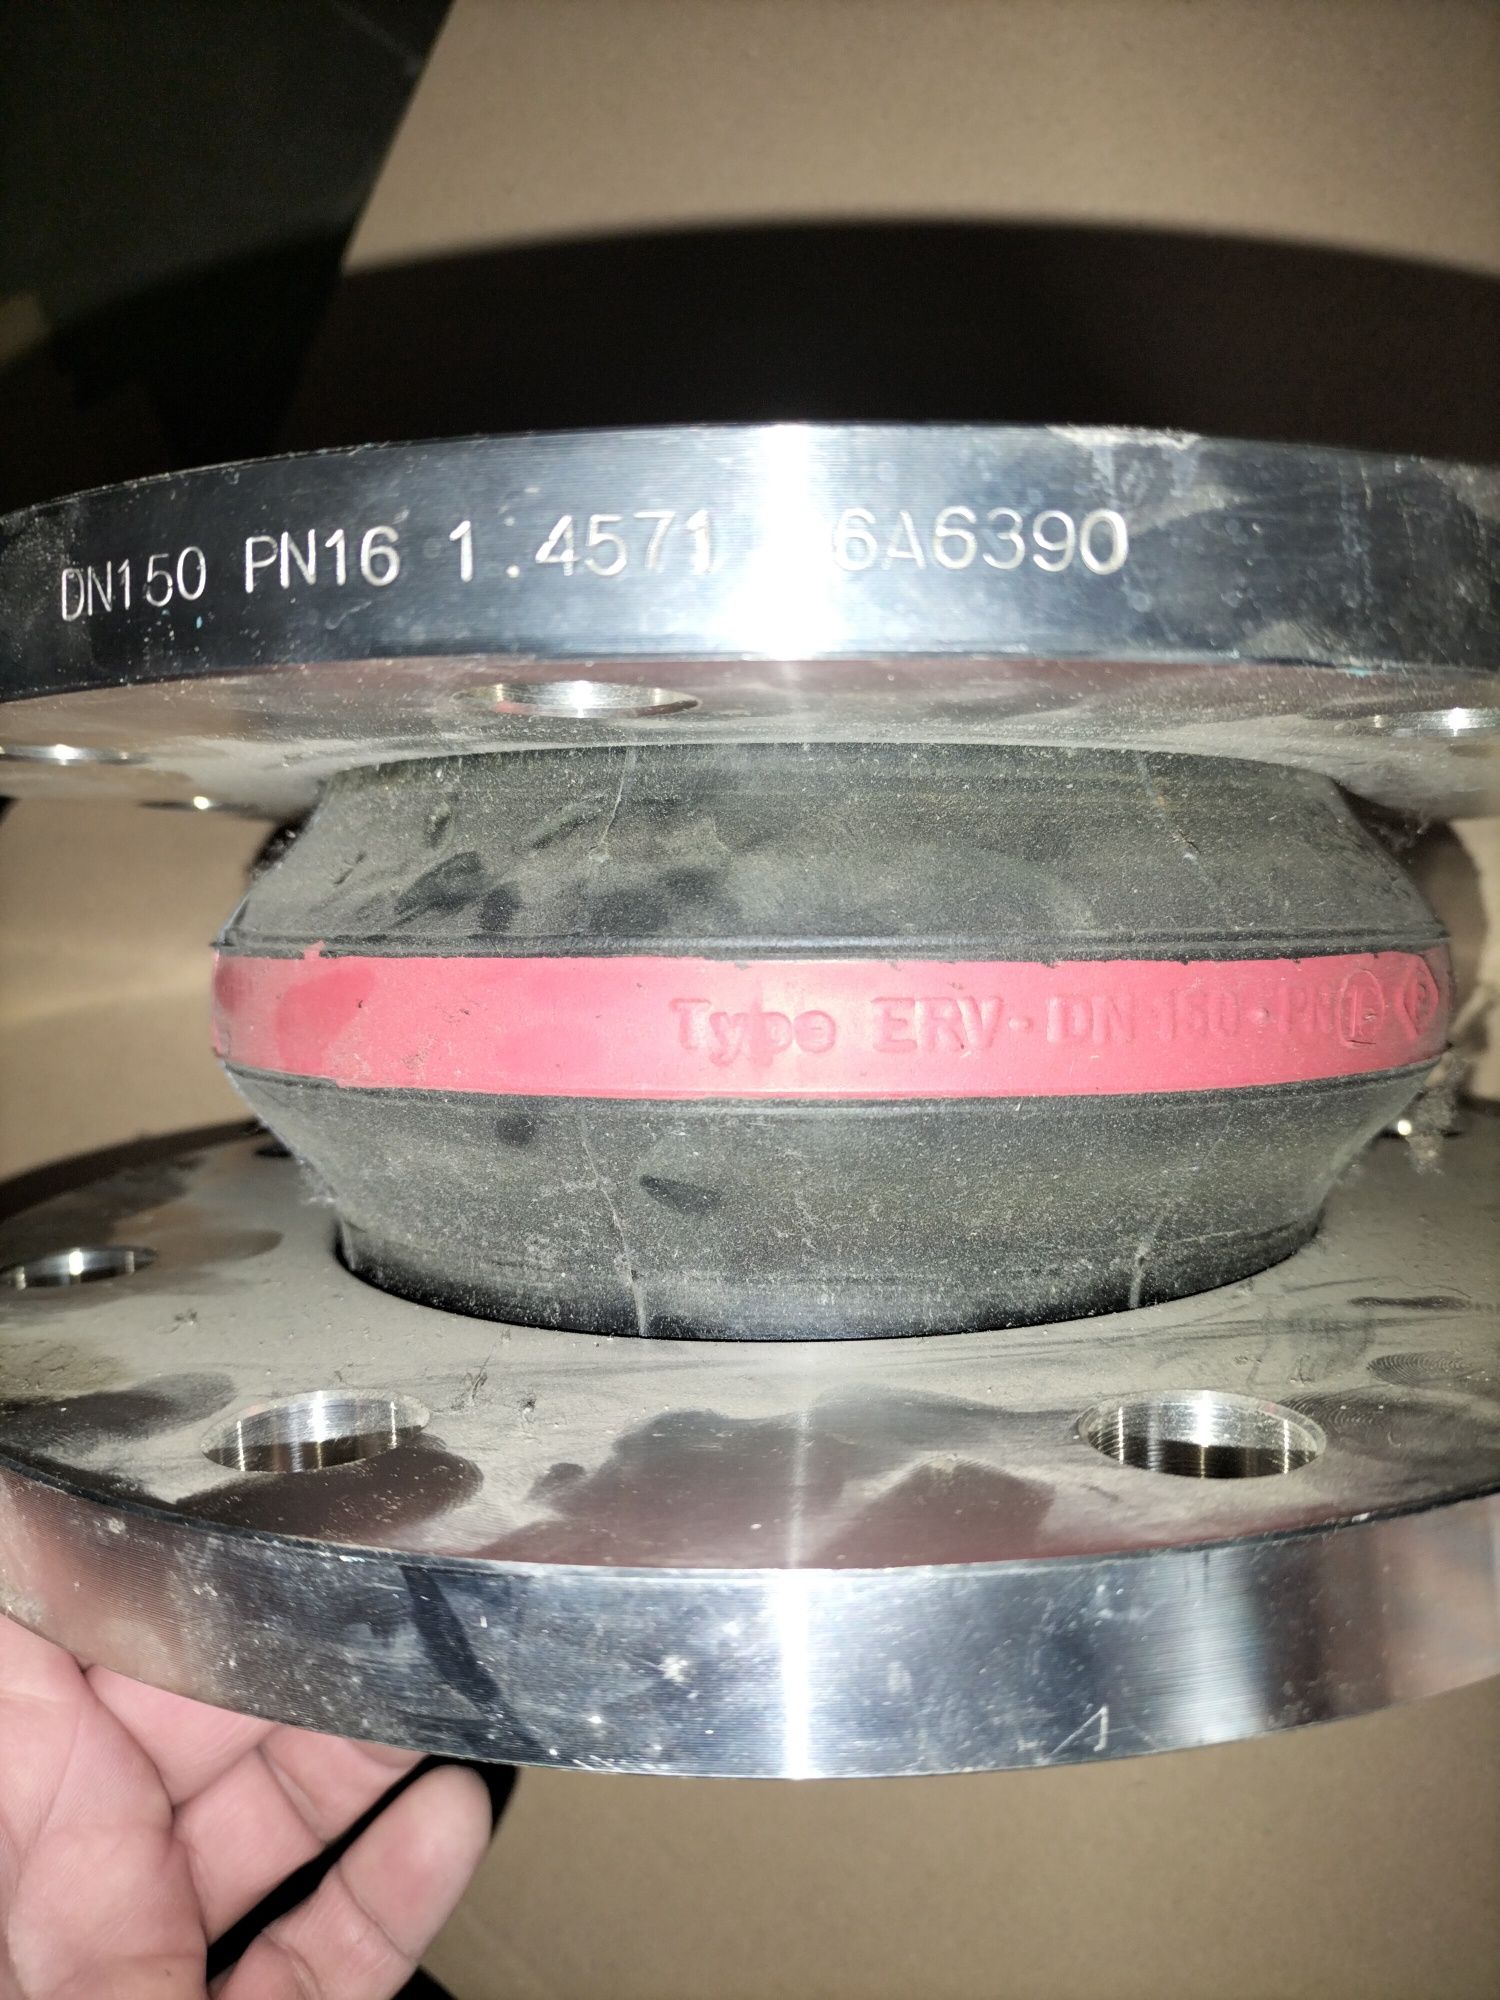 - Racord compensator antivibrant ERV DN 150PN16 1.45